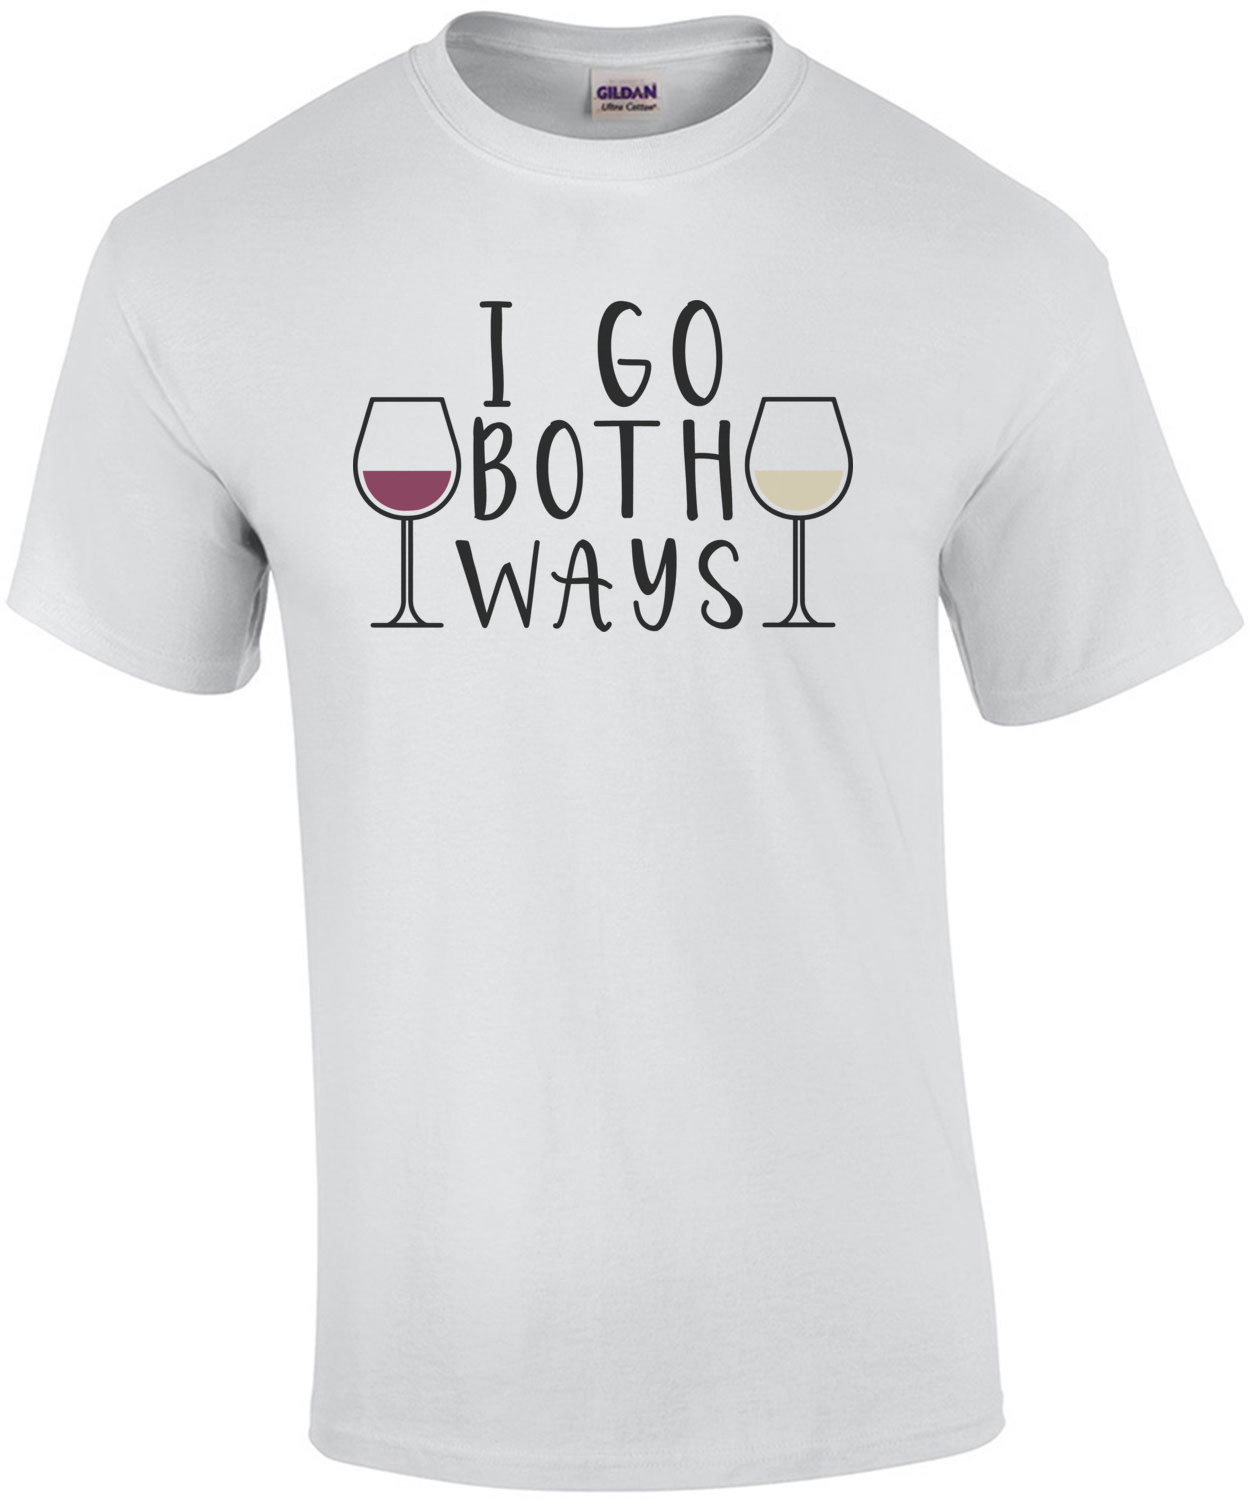 I go both ways - White and Red Wine T-Shirt